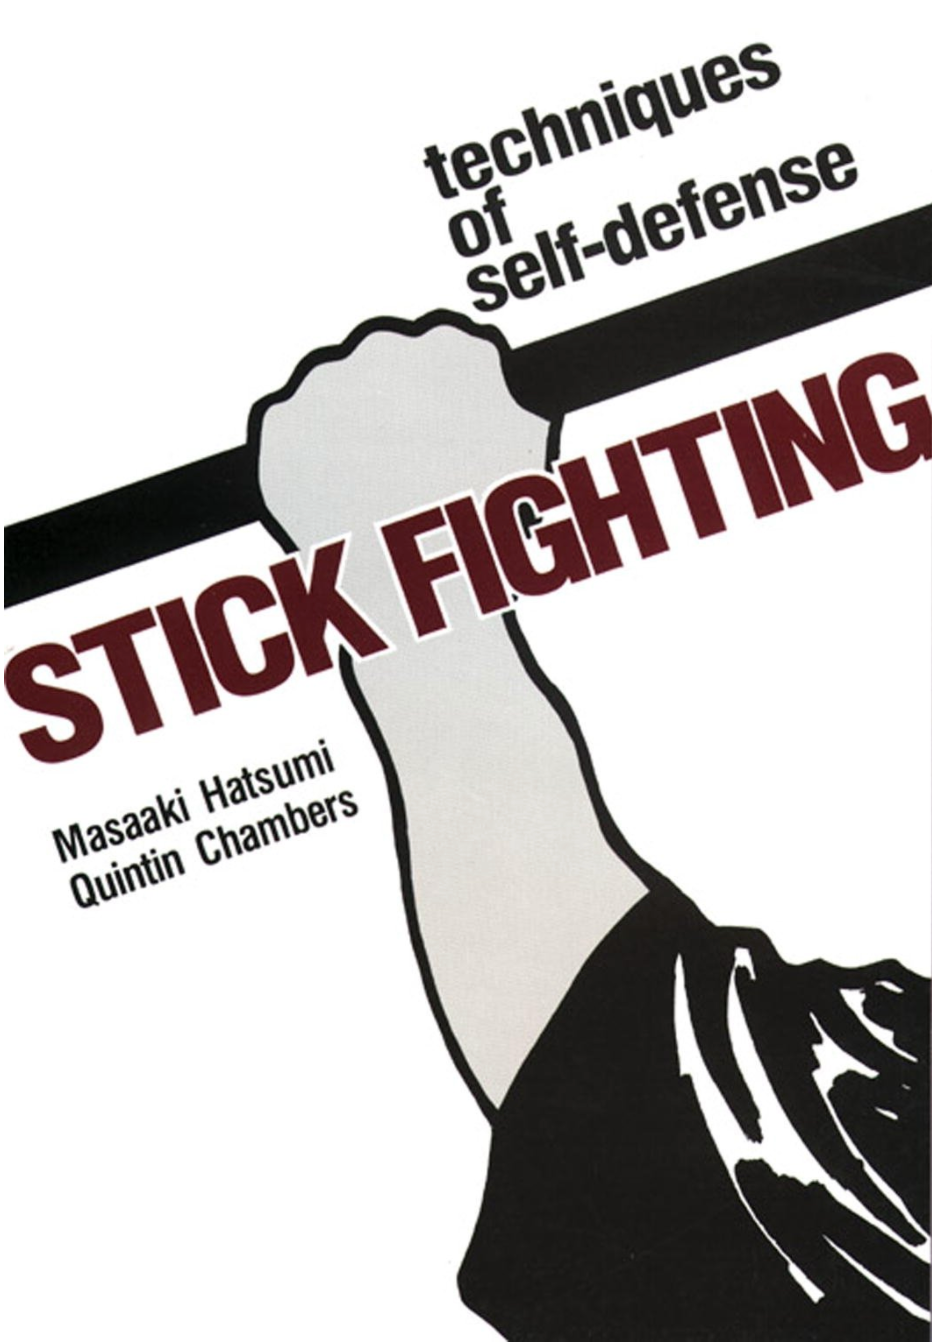 Stick Fighting: Techniques of Self-Defense Book by Masaaki Hatsumi - Budovideos